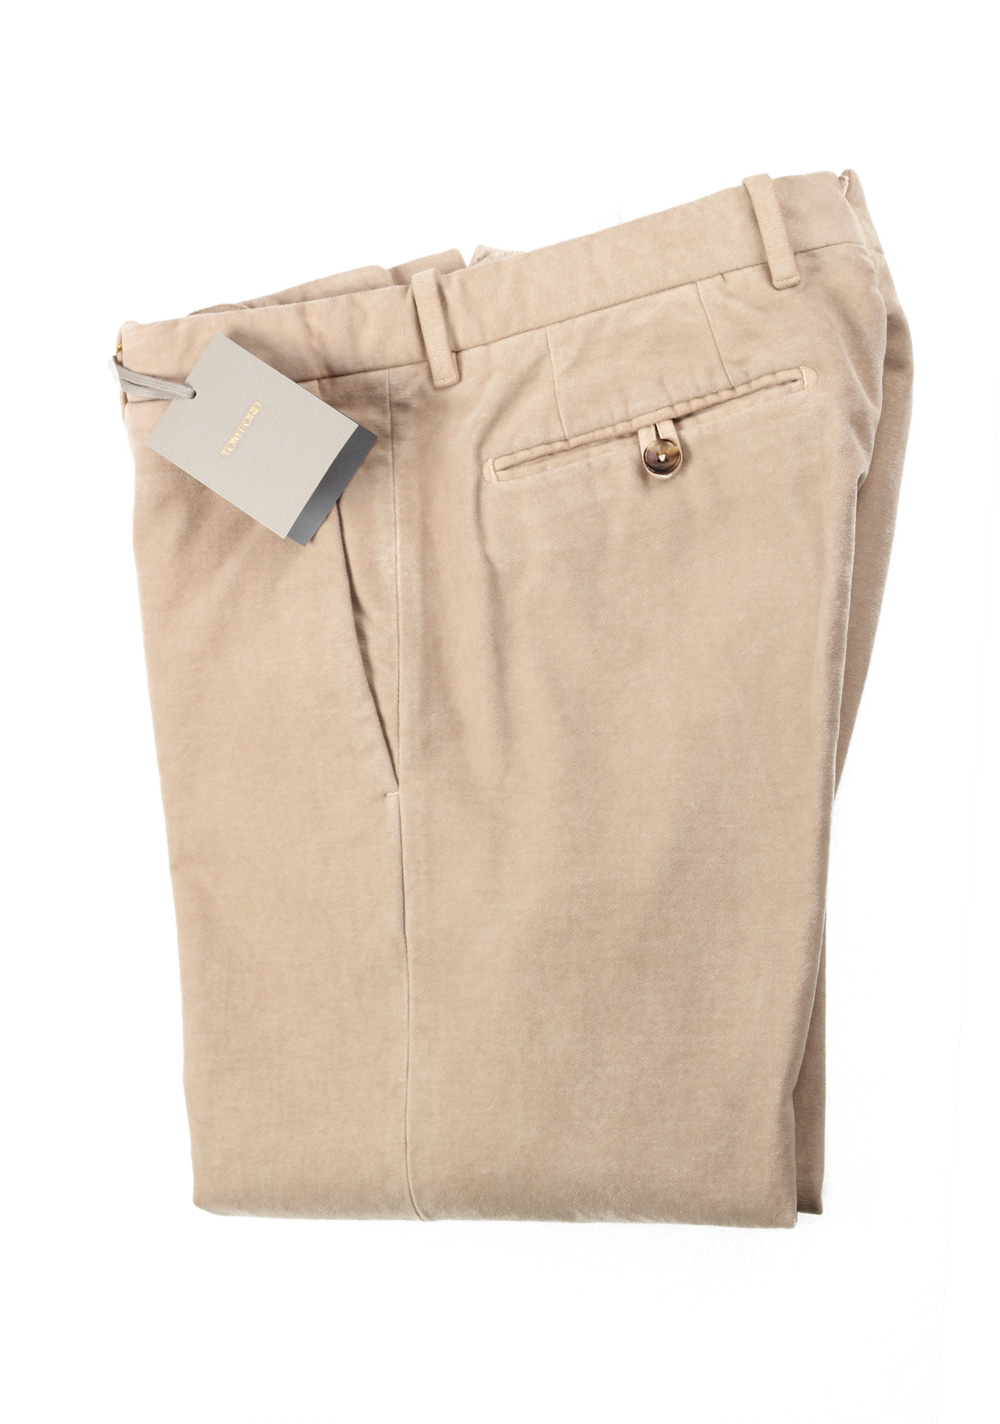 TOM FORD Beige Trousers Size 48 / 32 U.S. | Costume Limité